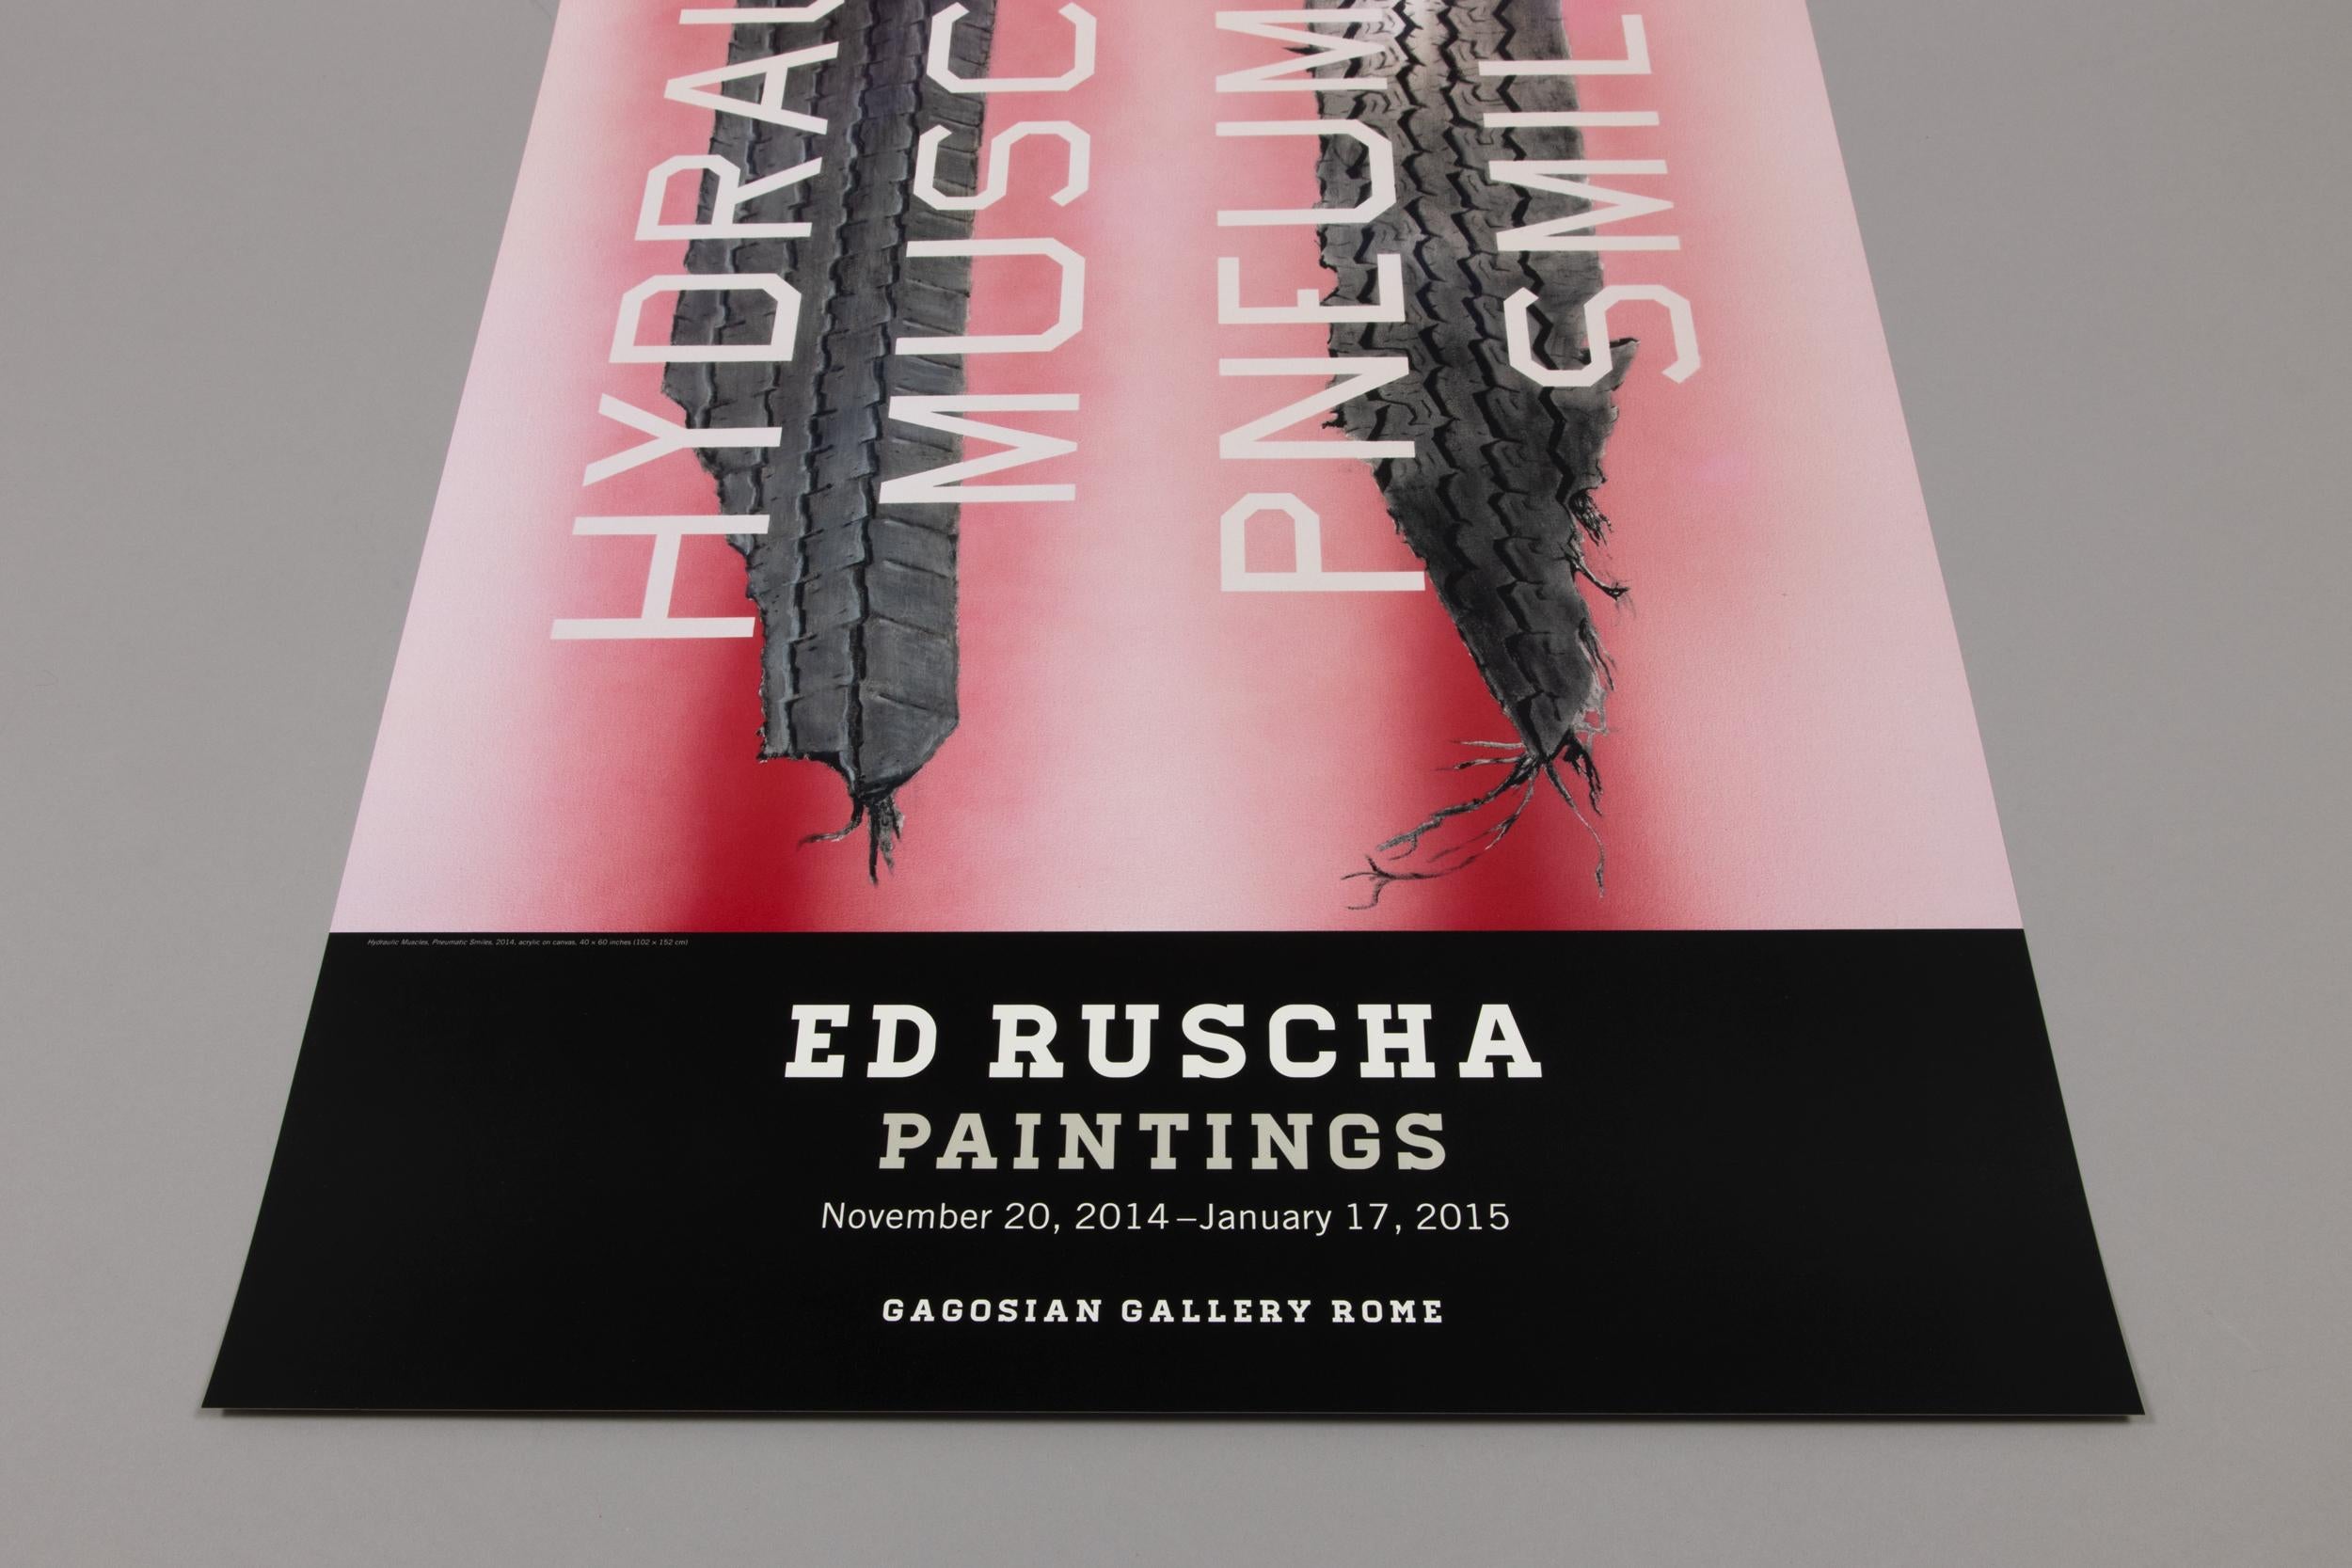 Original exhibition poster of Ed Ruscha's 